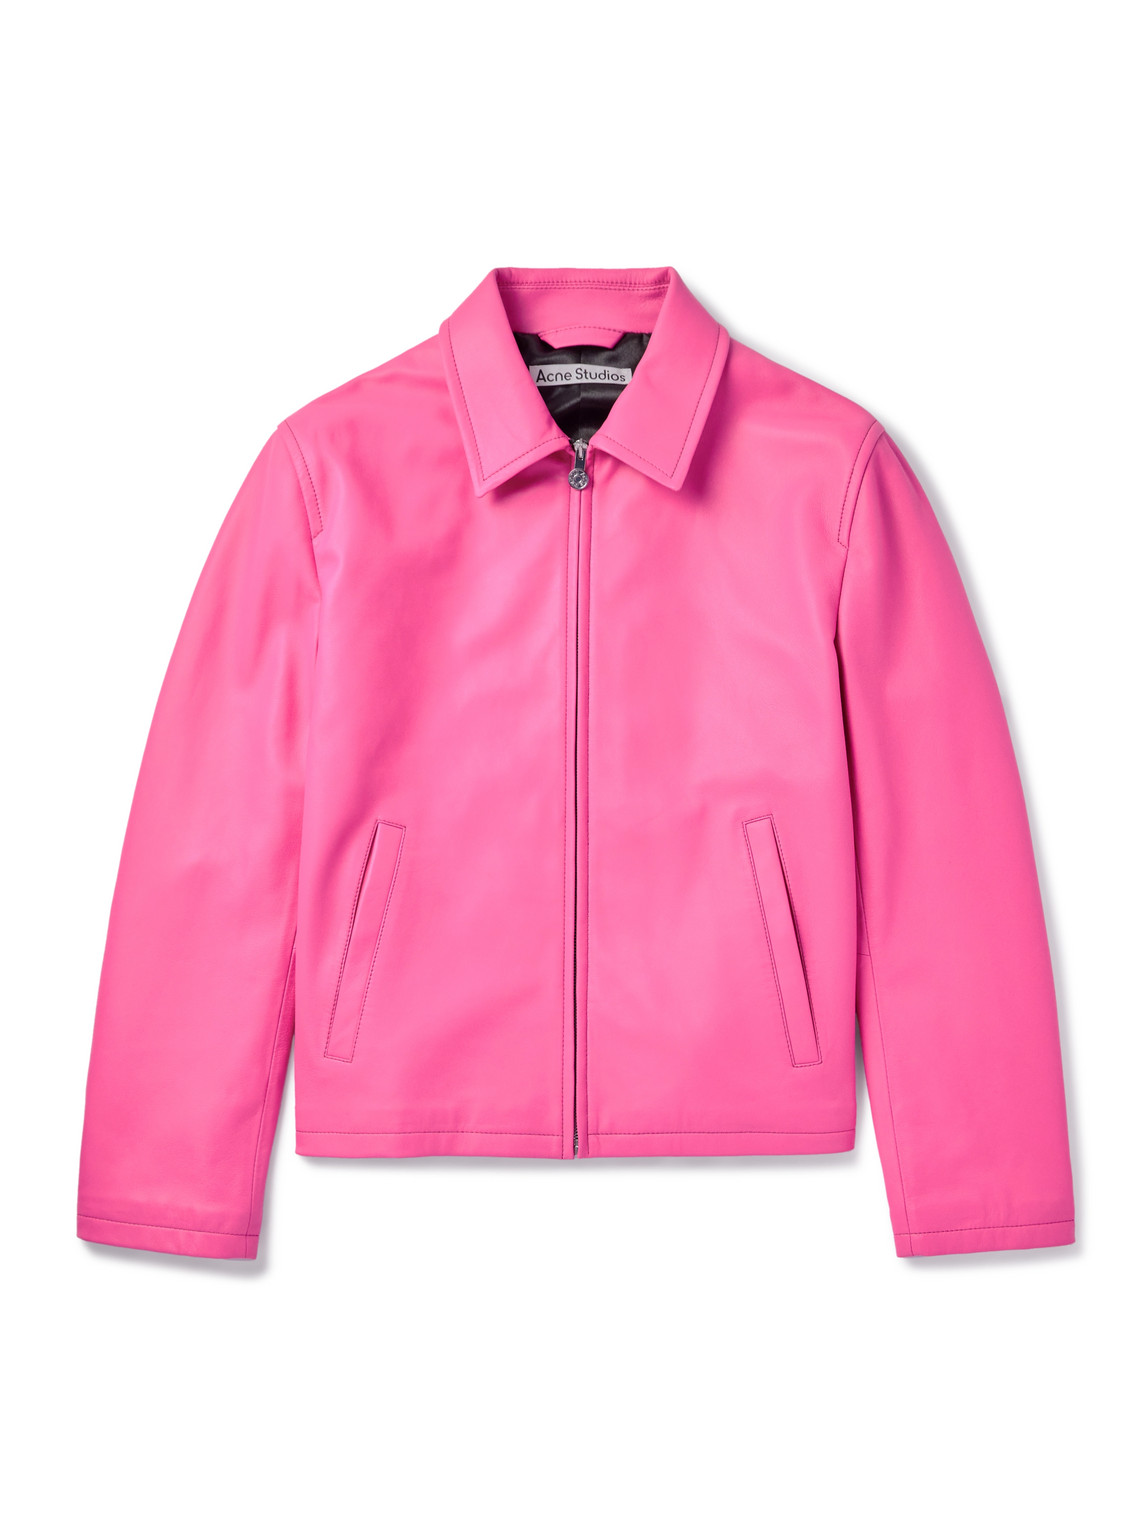 Acne Studios - Leather Jacket - Men - Pink - IT 48 von Acne Studios